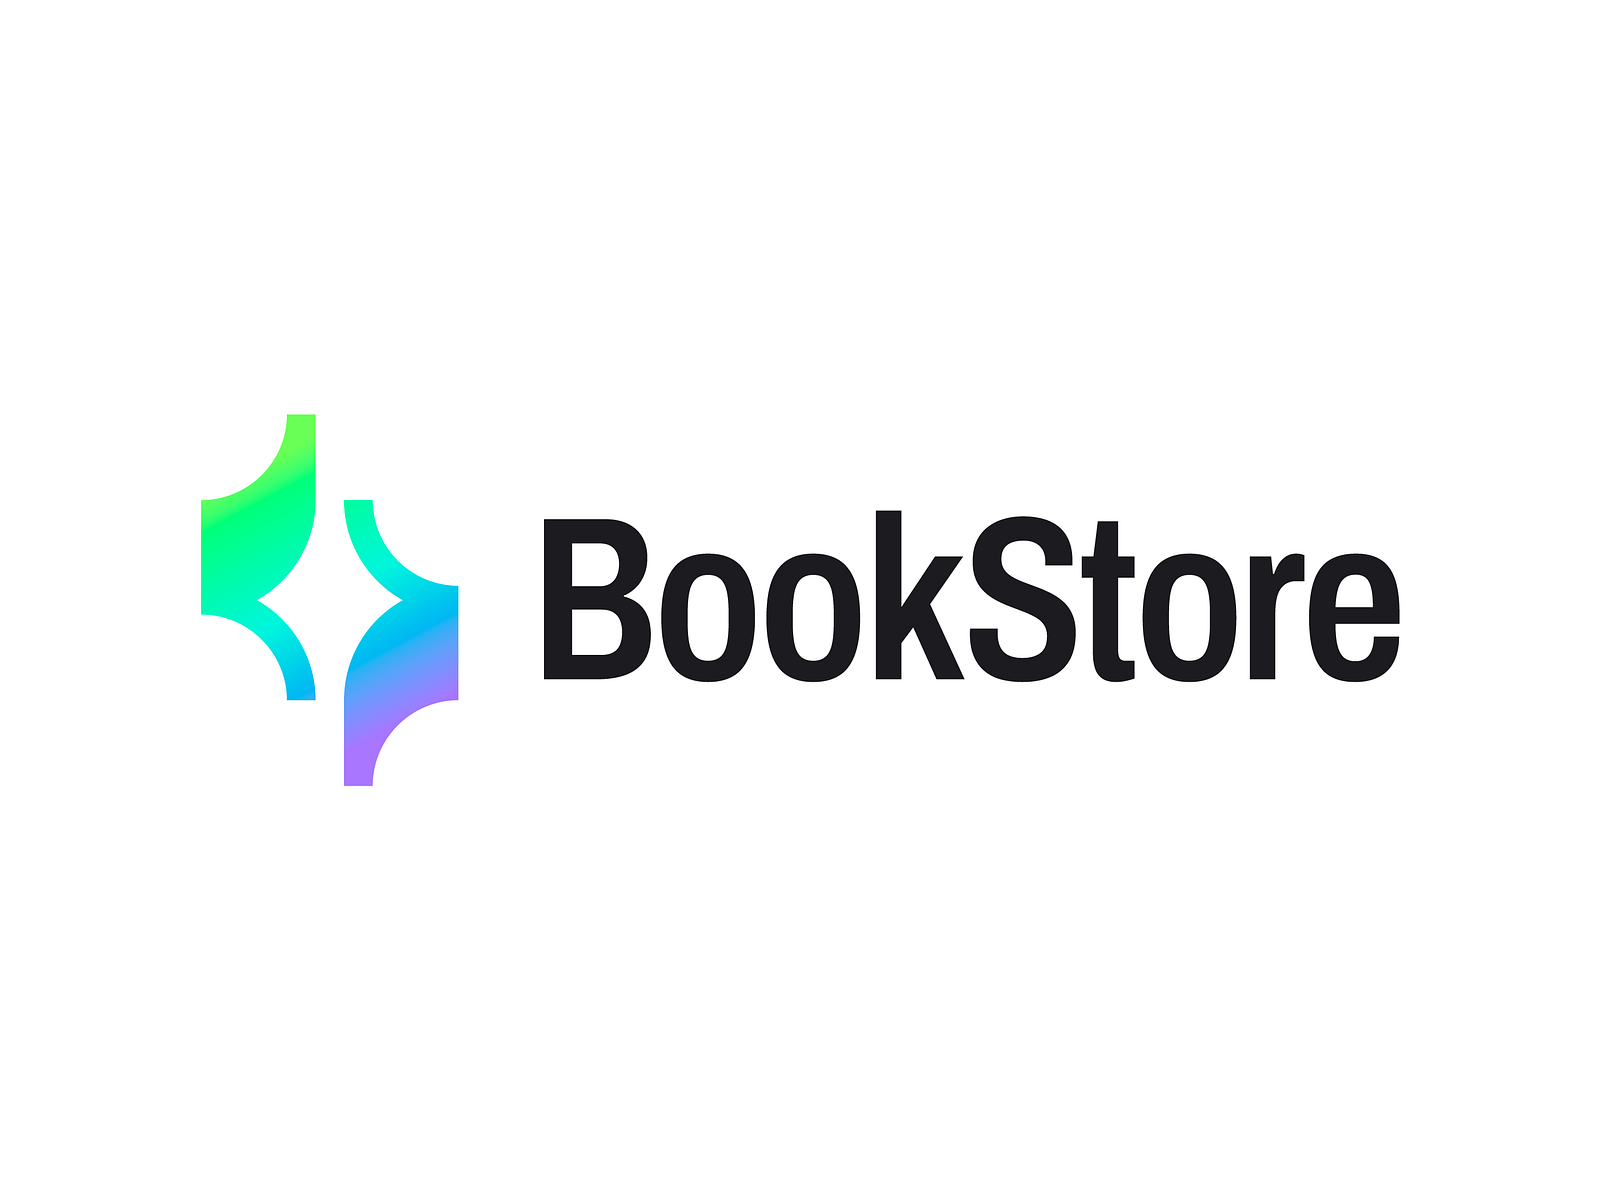 BookStore | Logo idea by Oleg Coada on Dribbble